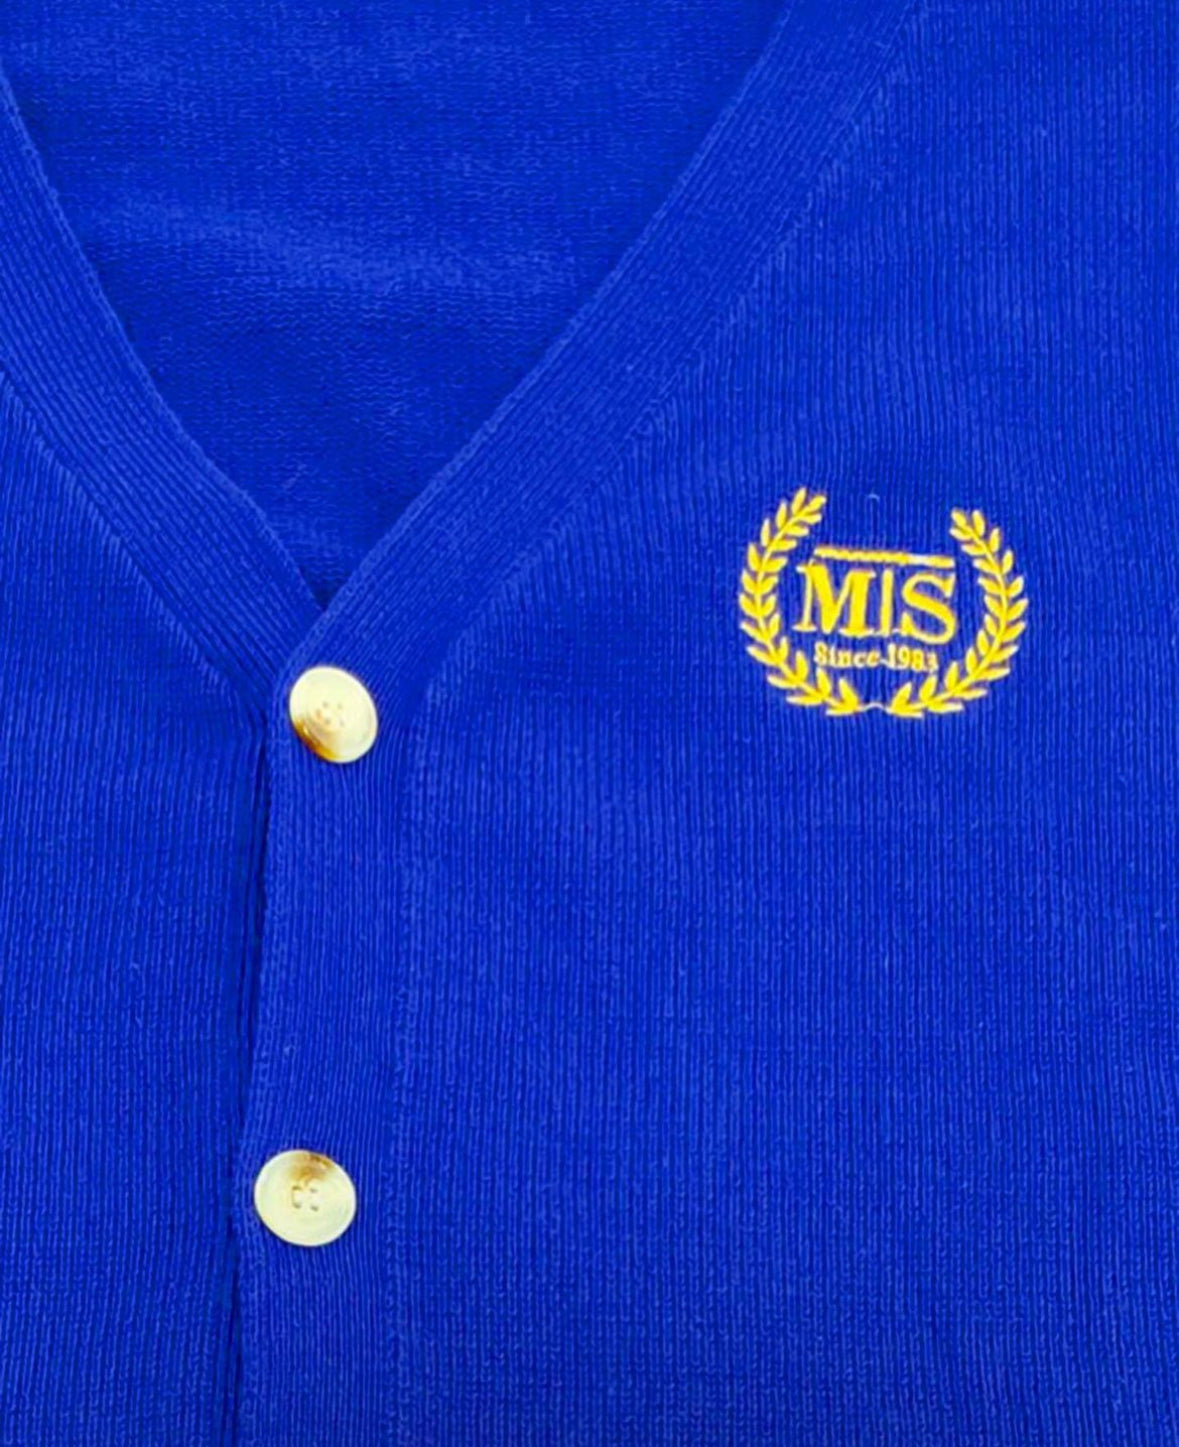 Signature MTS 1983 Cardigan Sweater